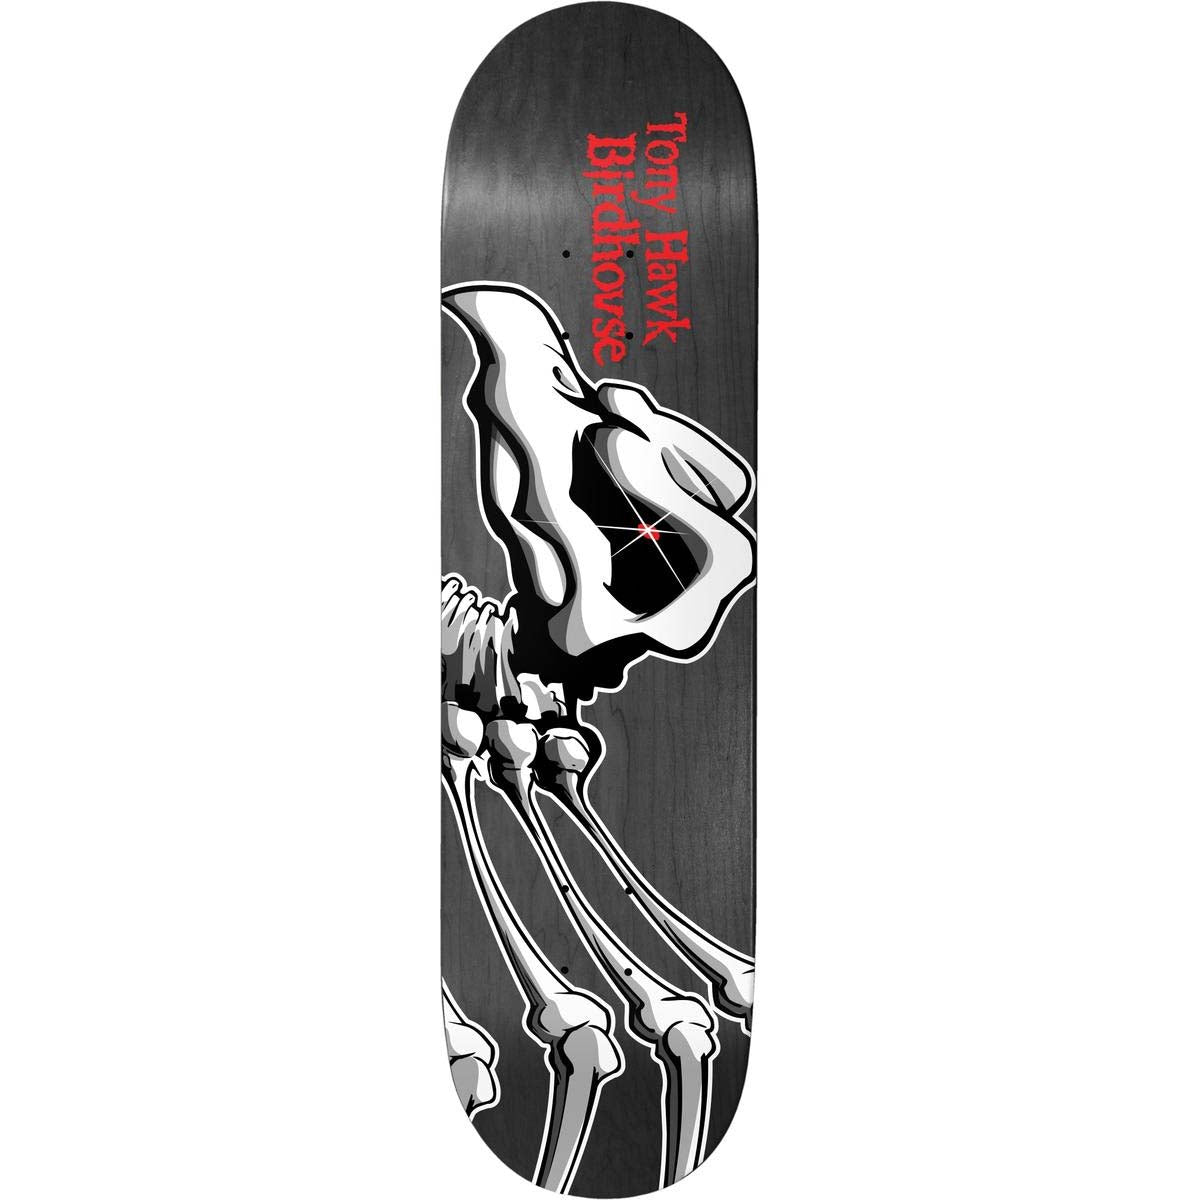 Birdhouse Skateboards "Tony Hawk- Falcon" 8.125" Deck